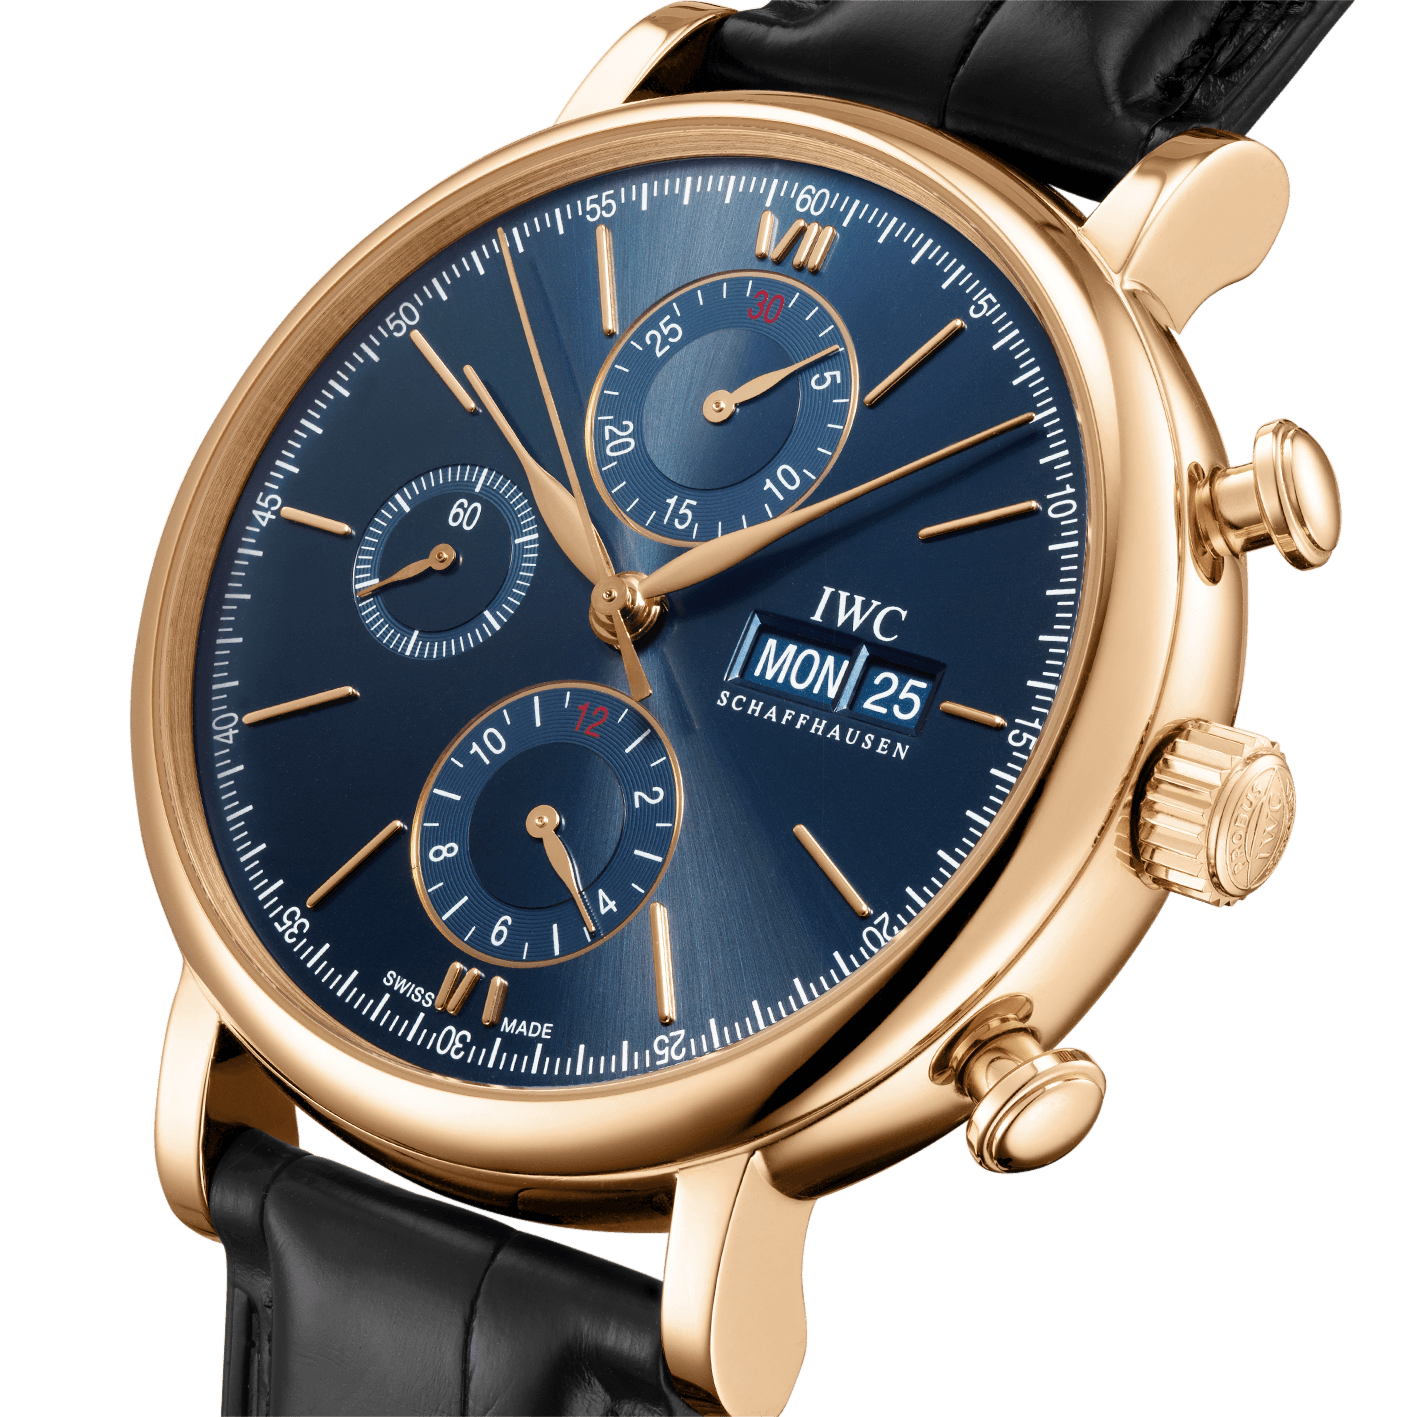 IWC Portofino Chronograph Blue Dial Black Leather Strap Watch for Men - IW391035